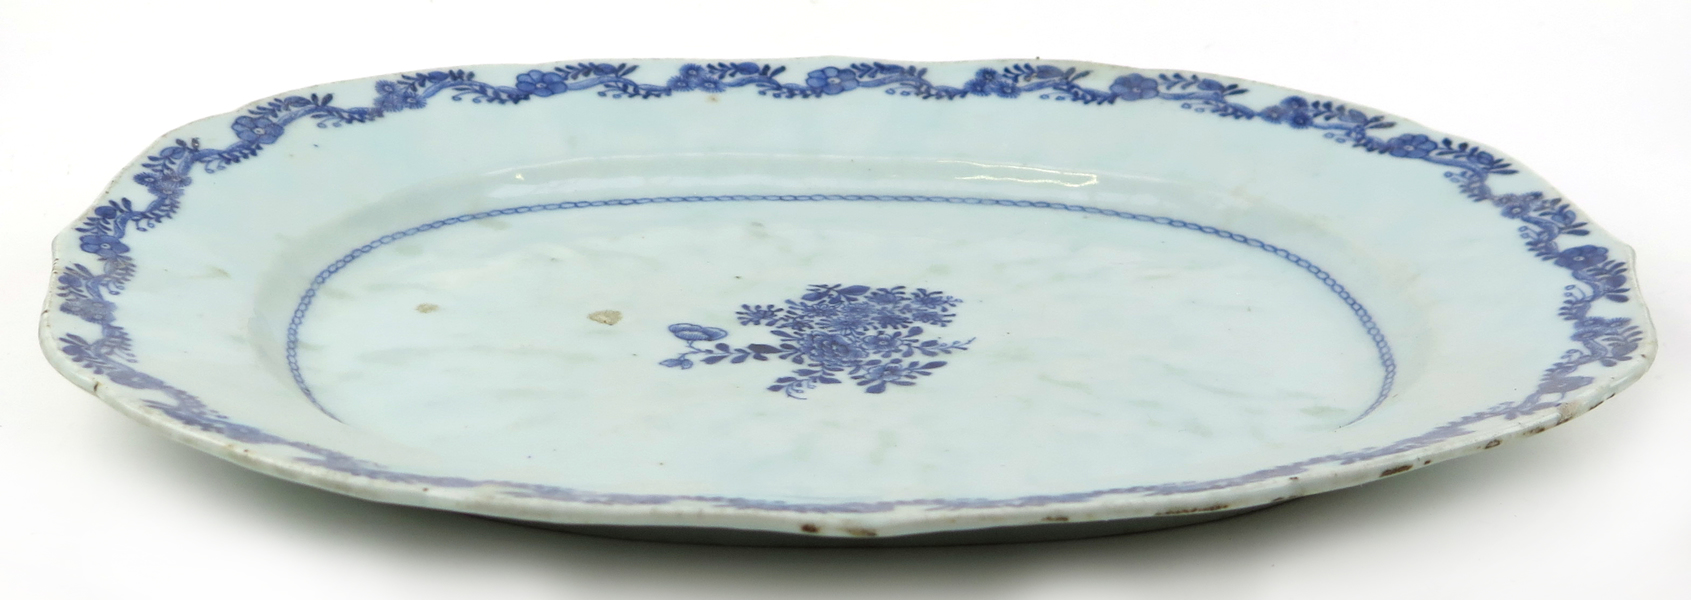 Stekfat, porslin, Kina, Qianlong (1736-95), blå underglasyrdekor, _24545a_8dad84f26161837_lg.jpeg